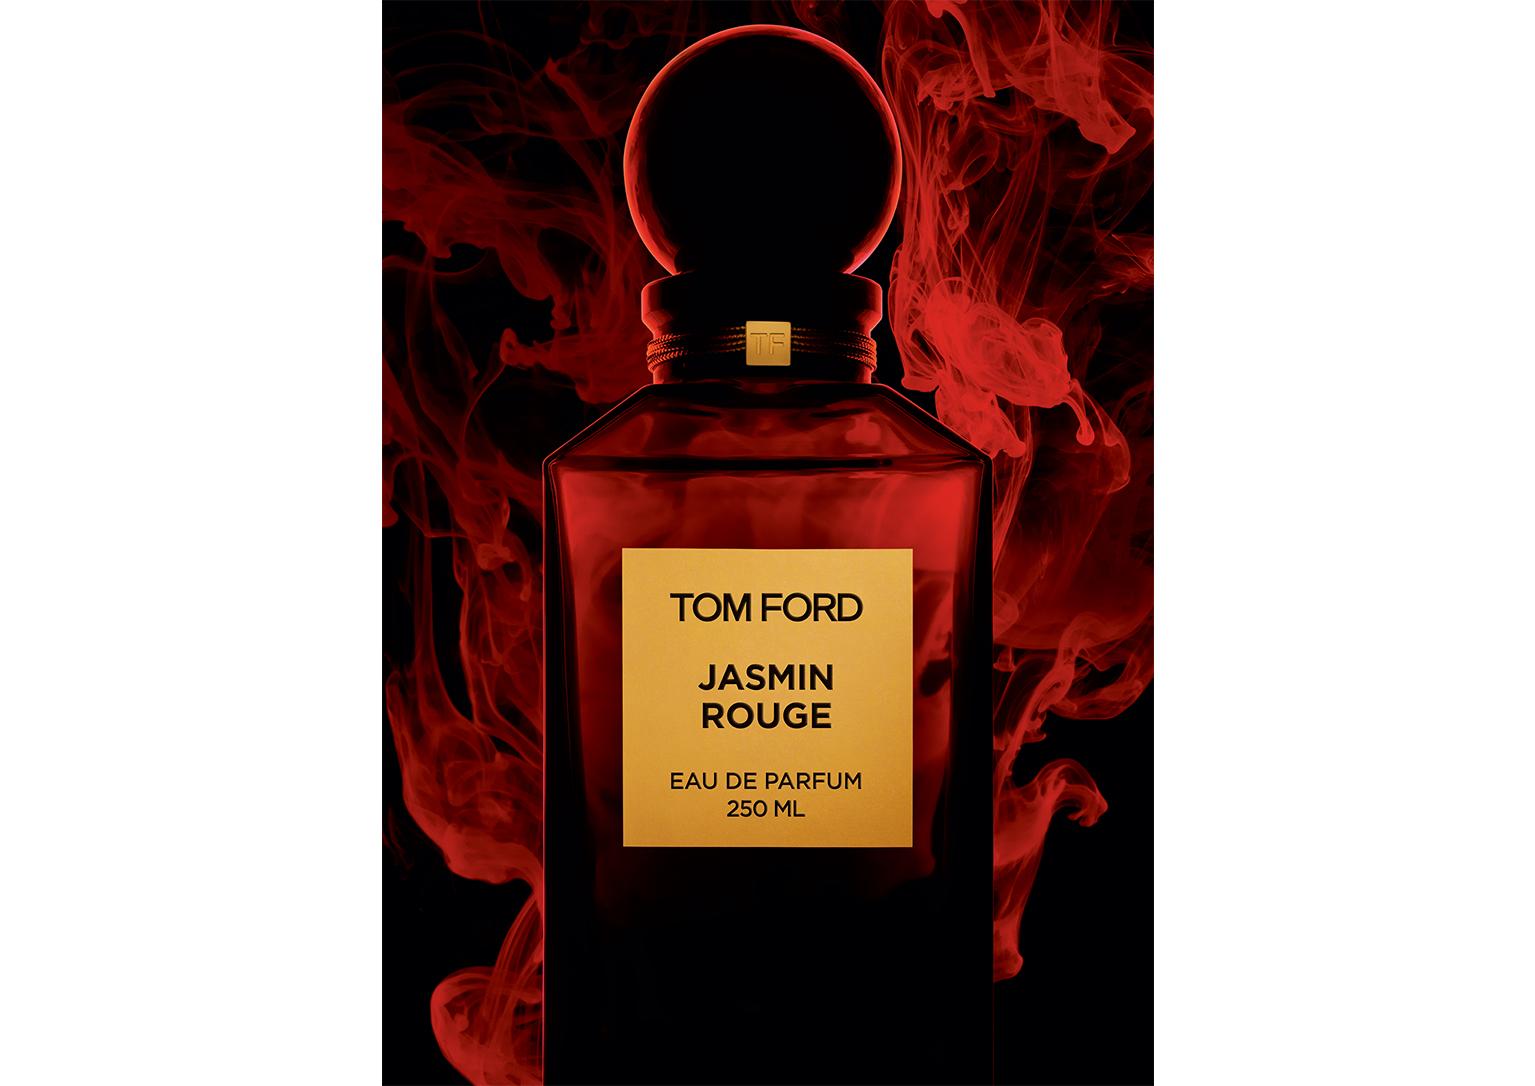 tom ford perfume jasmin rouge